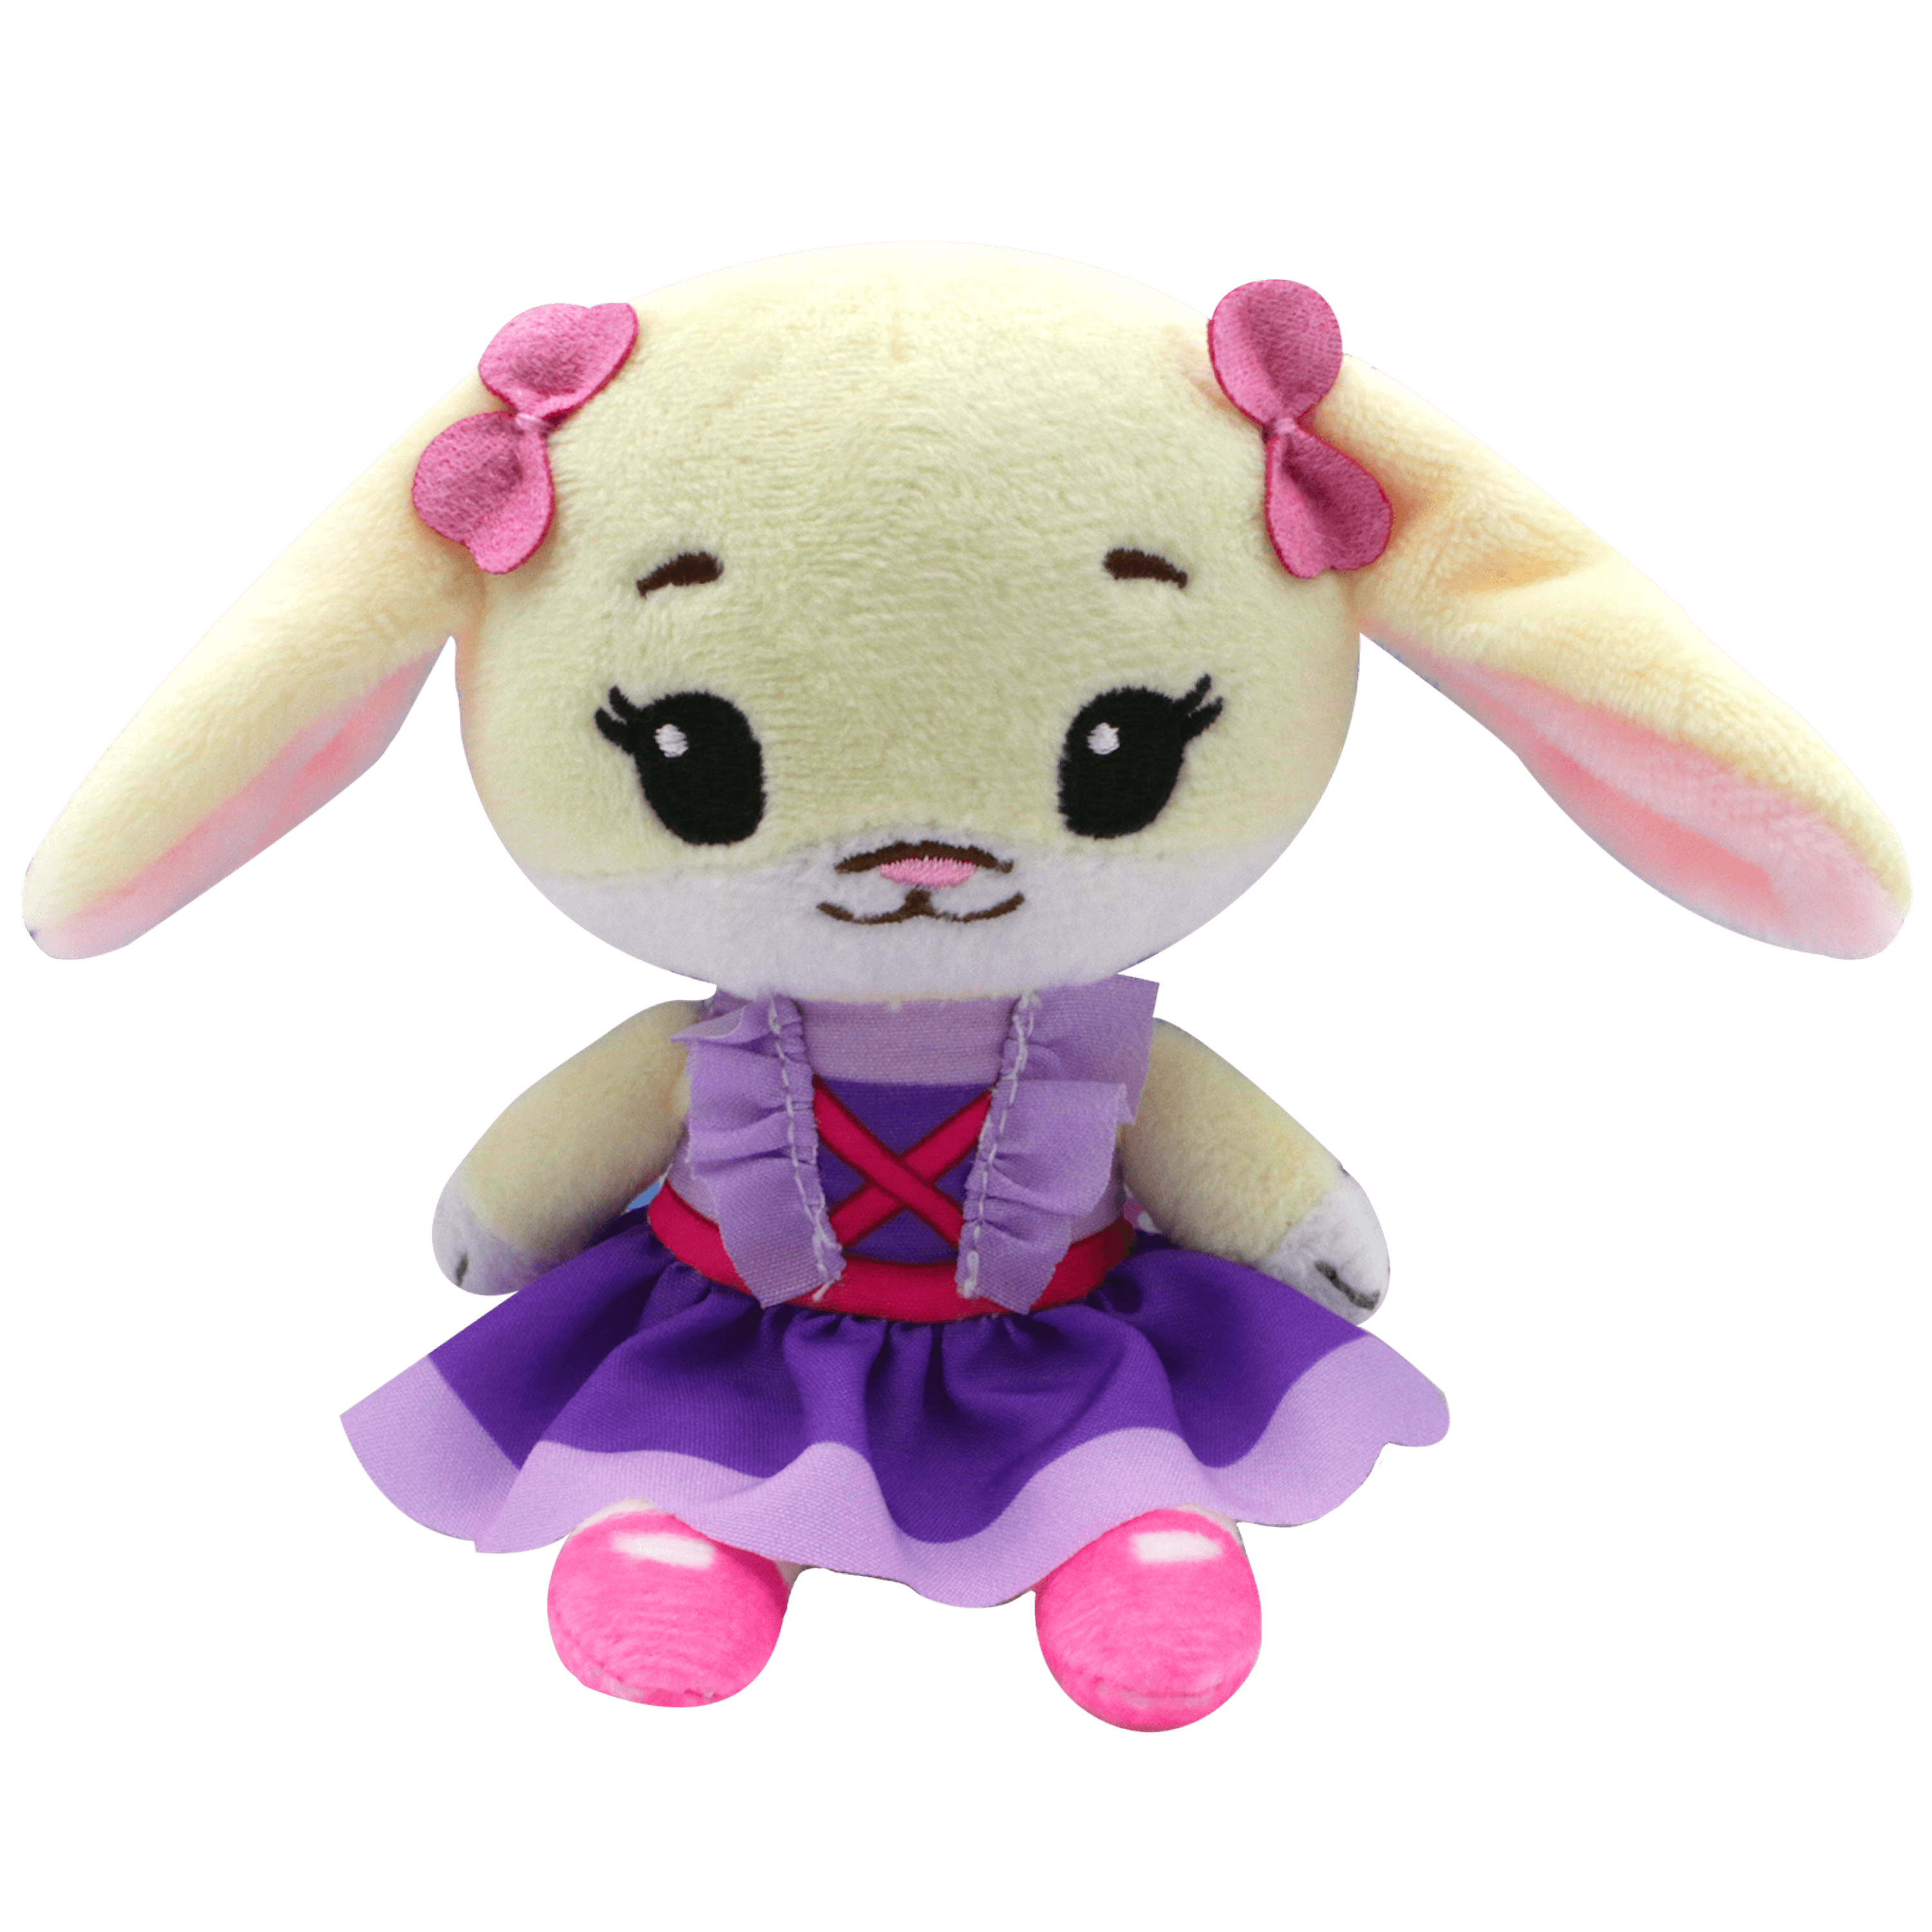 Tiny Tukkins Playset Assortment with Plush Stuffed Character, Bunny - image 4 of 7